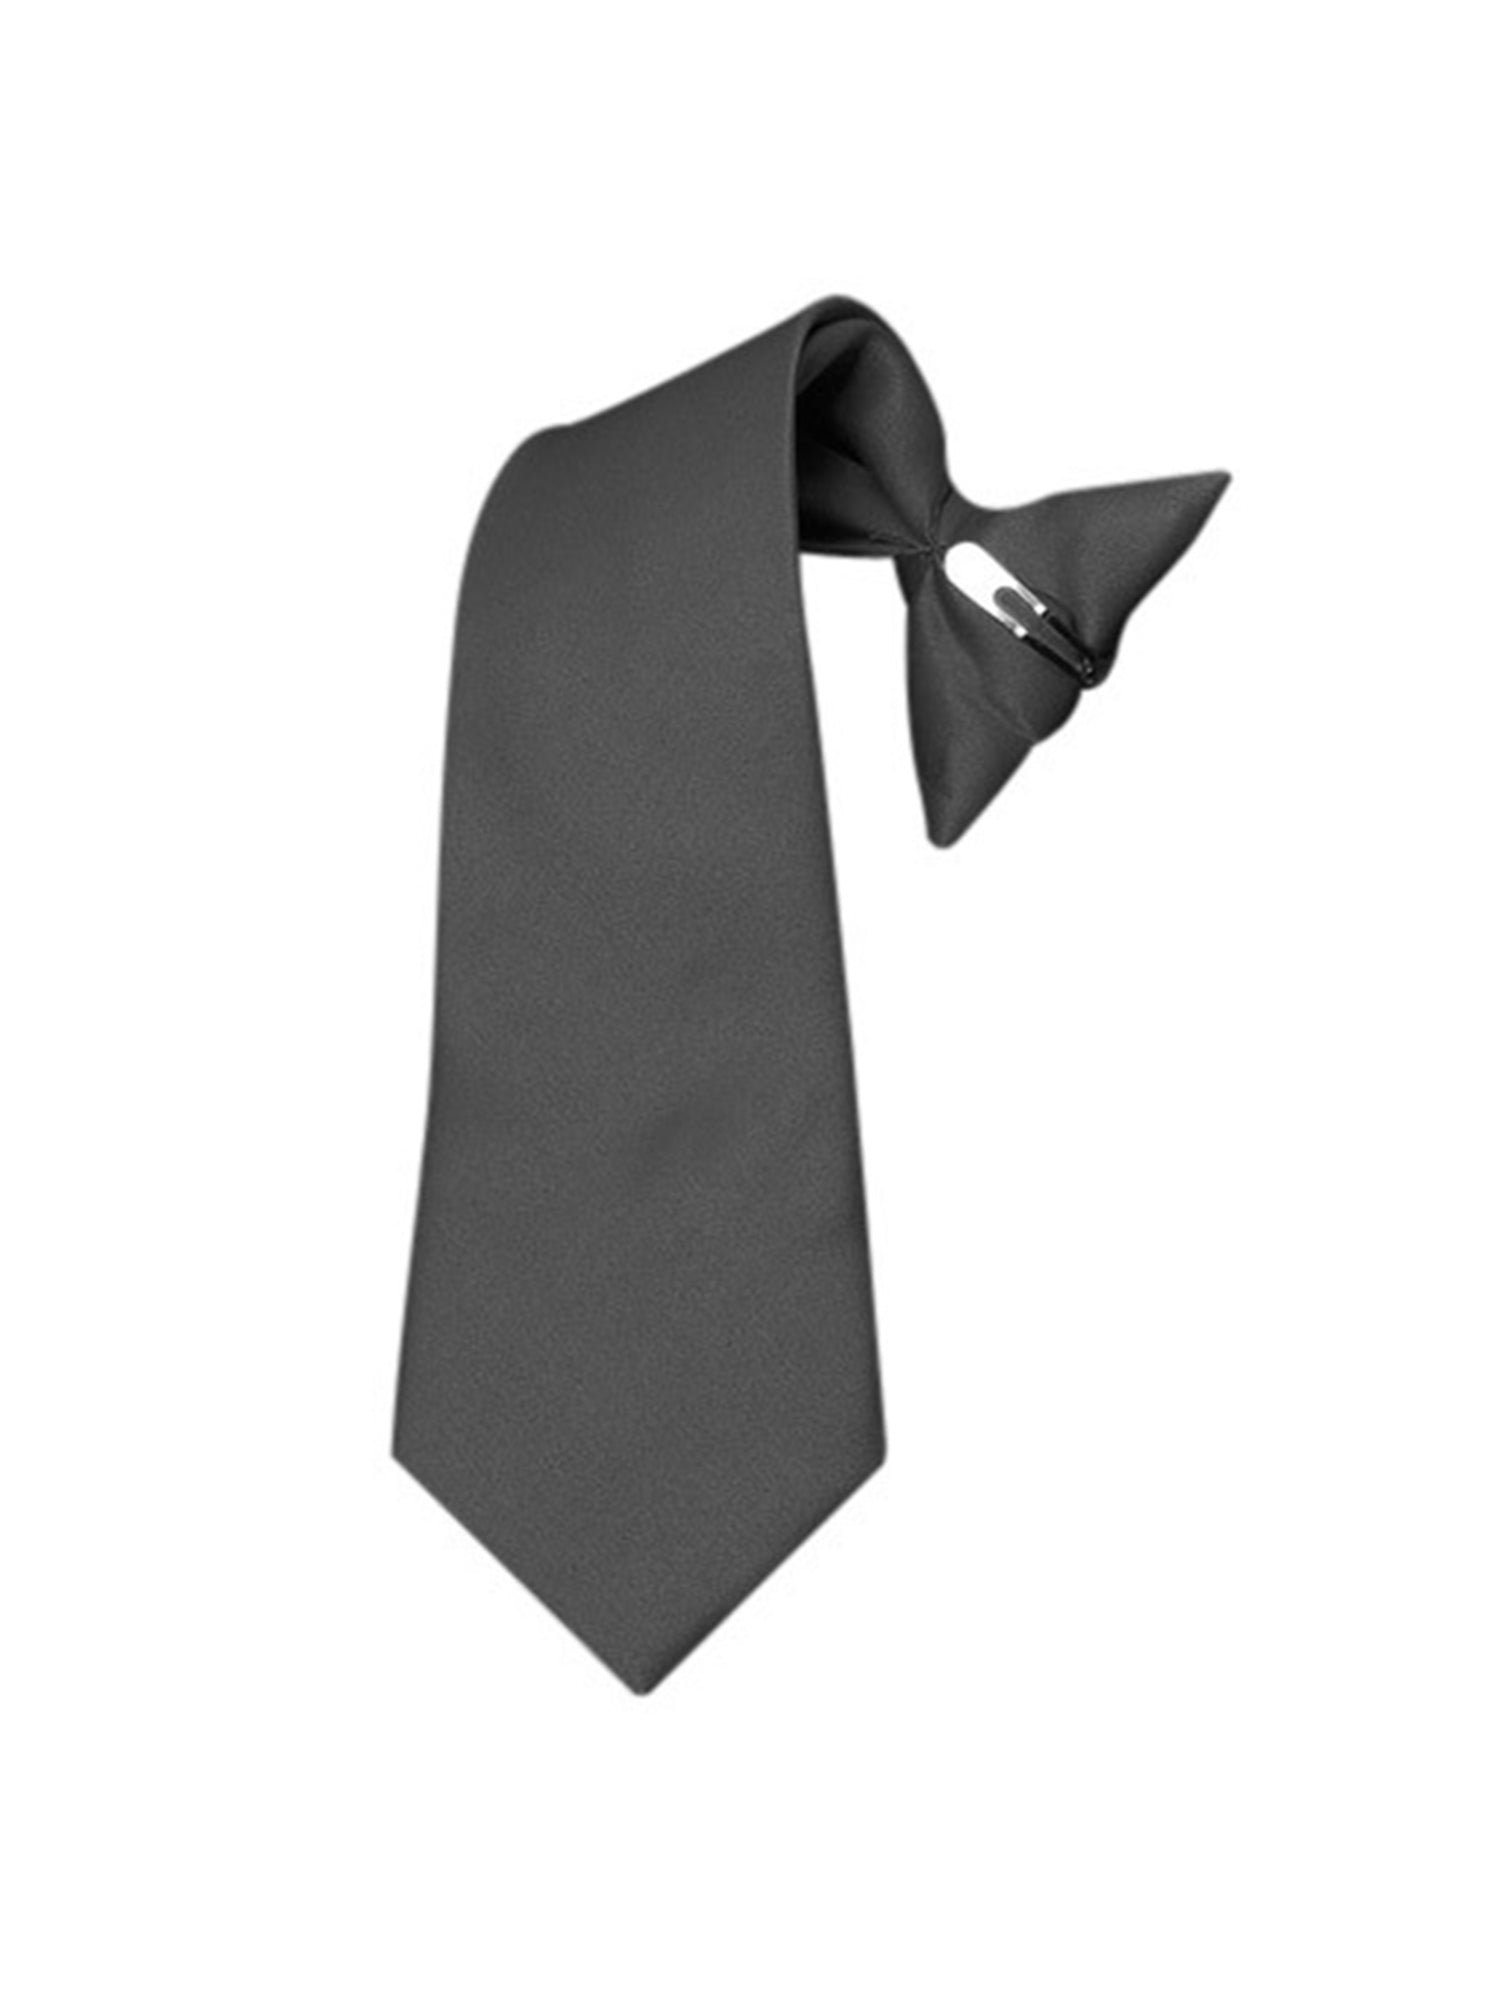 Boy's Solid Color Pre-tied Clip On Neck Tie Neck Tie TheDapperTie Charcoal 8" x 2.5" 